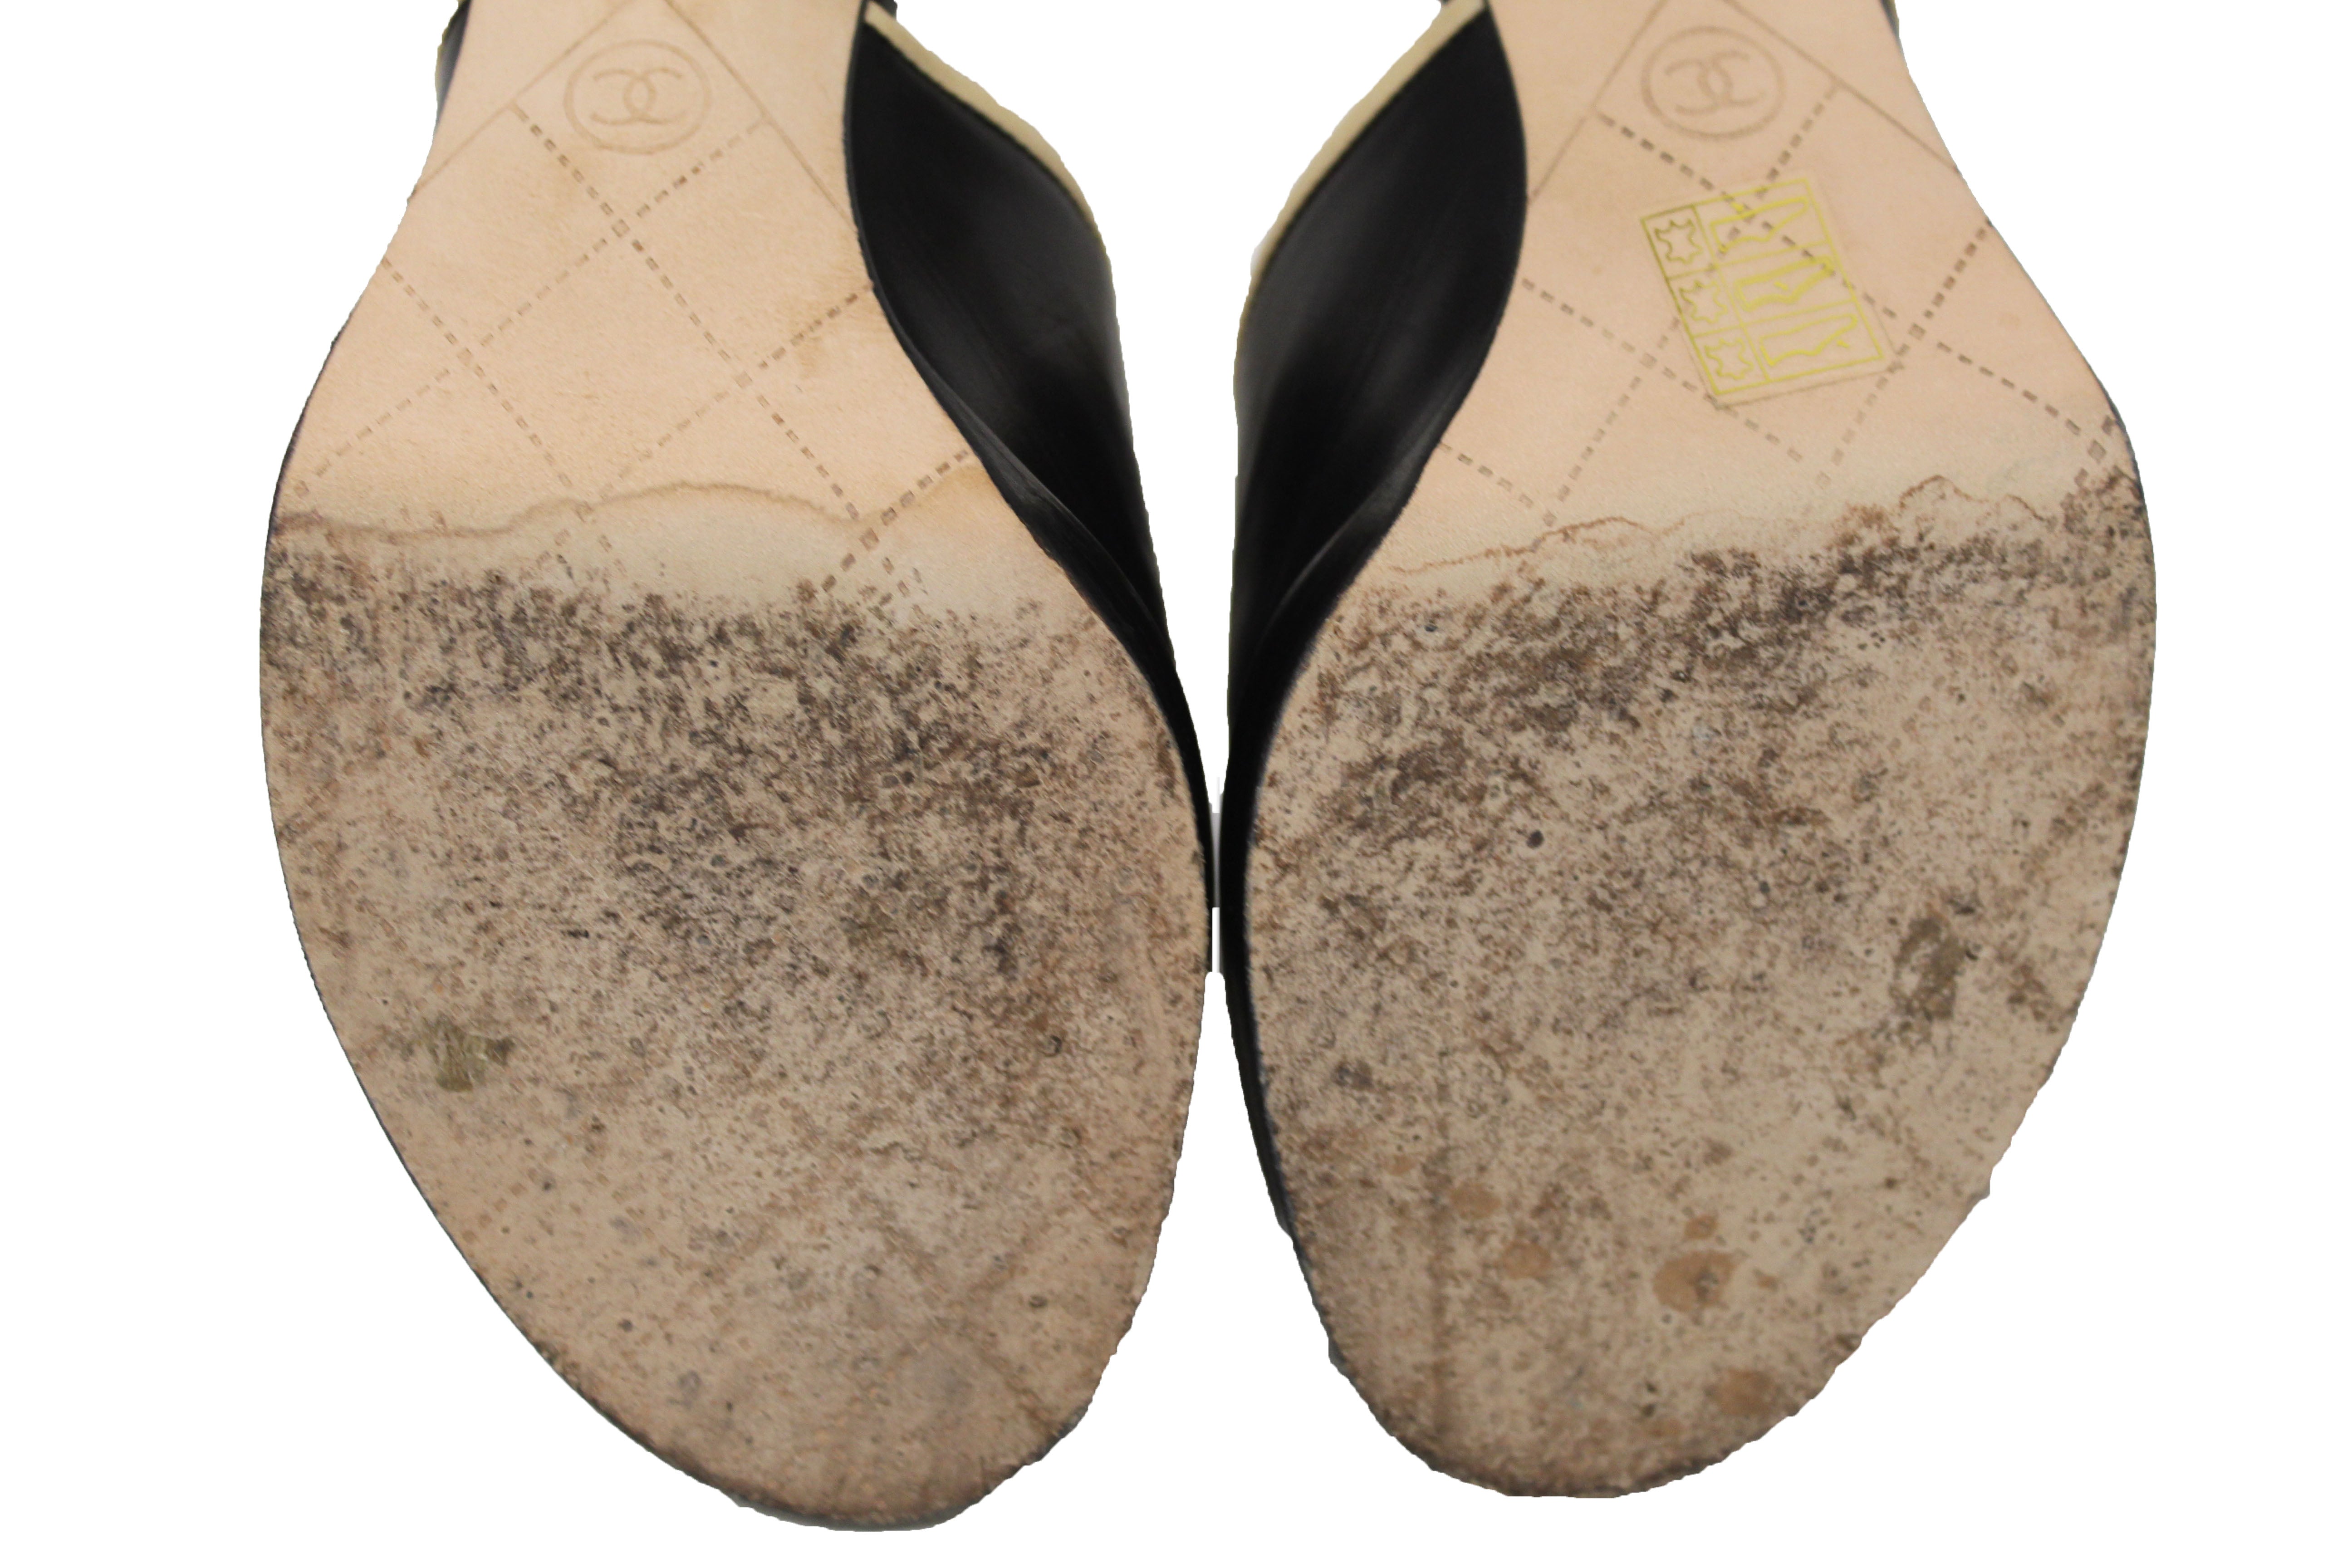 Authentic Chanel Chanel Black Leather Turnlock CC Logo Mule Strap Slide Heel Sandal 40